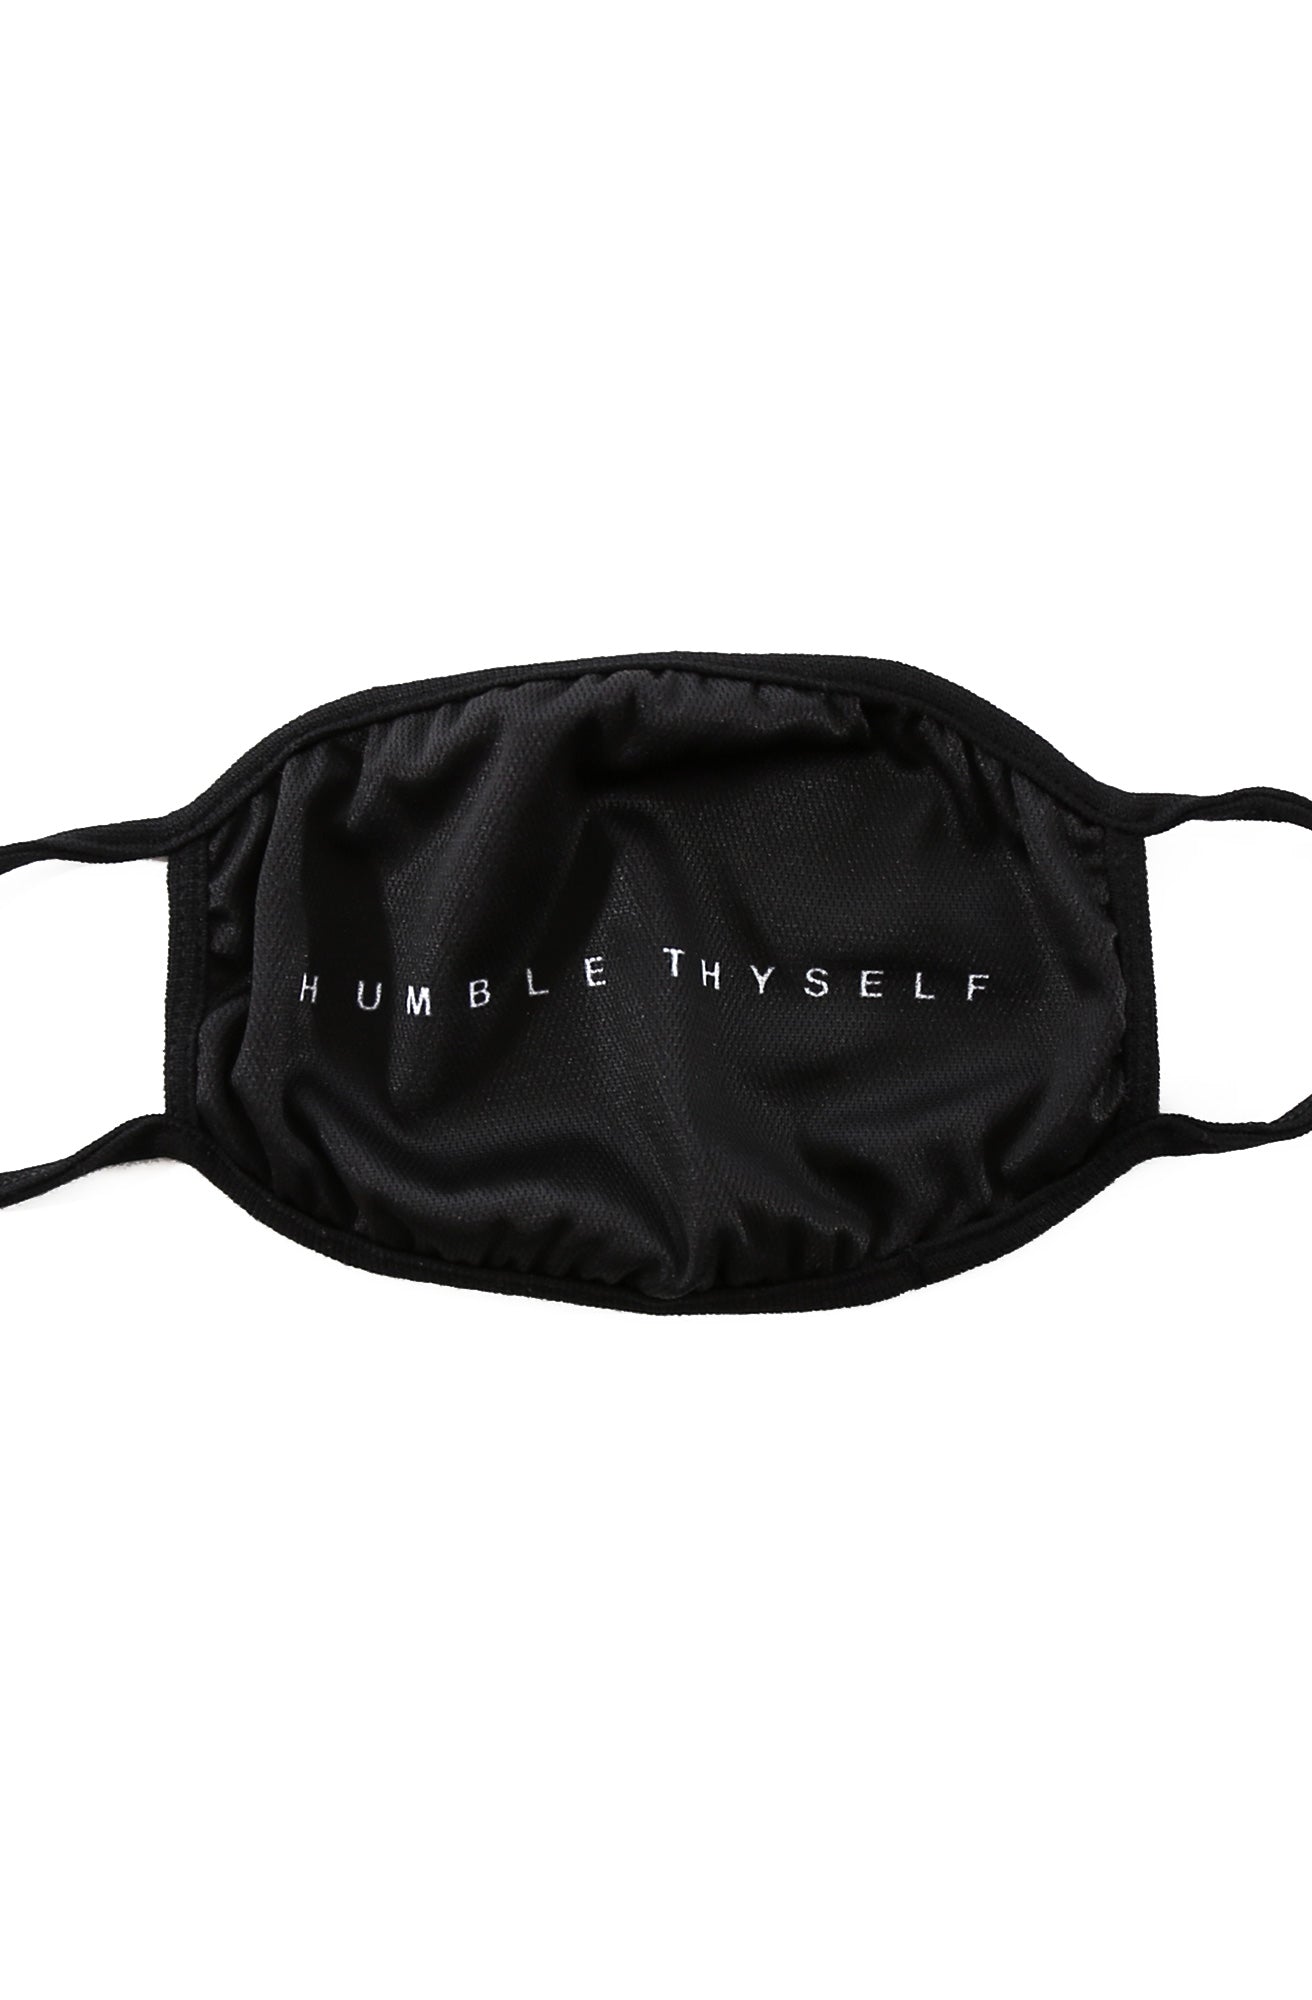 Humble Thyself (Black Original Face Mask)